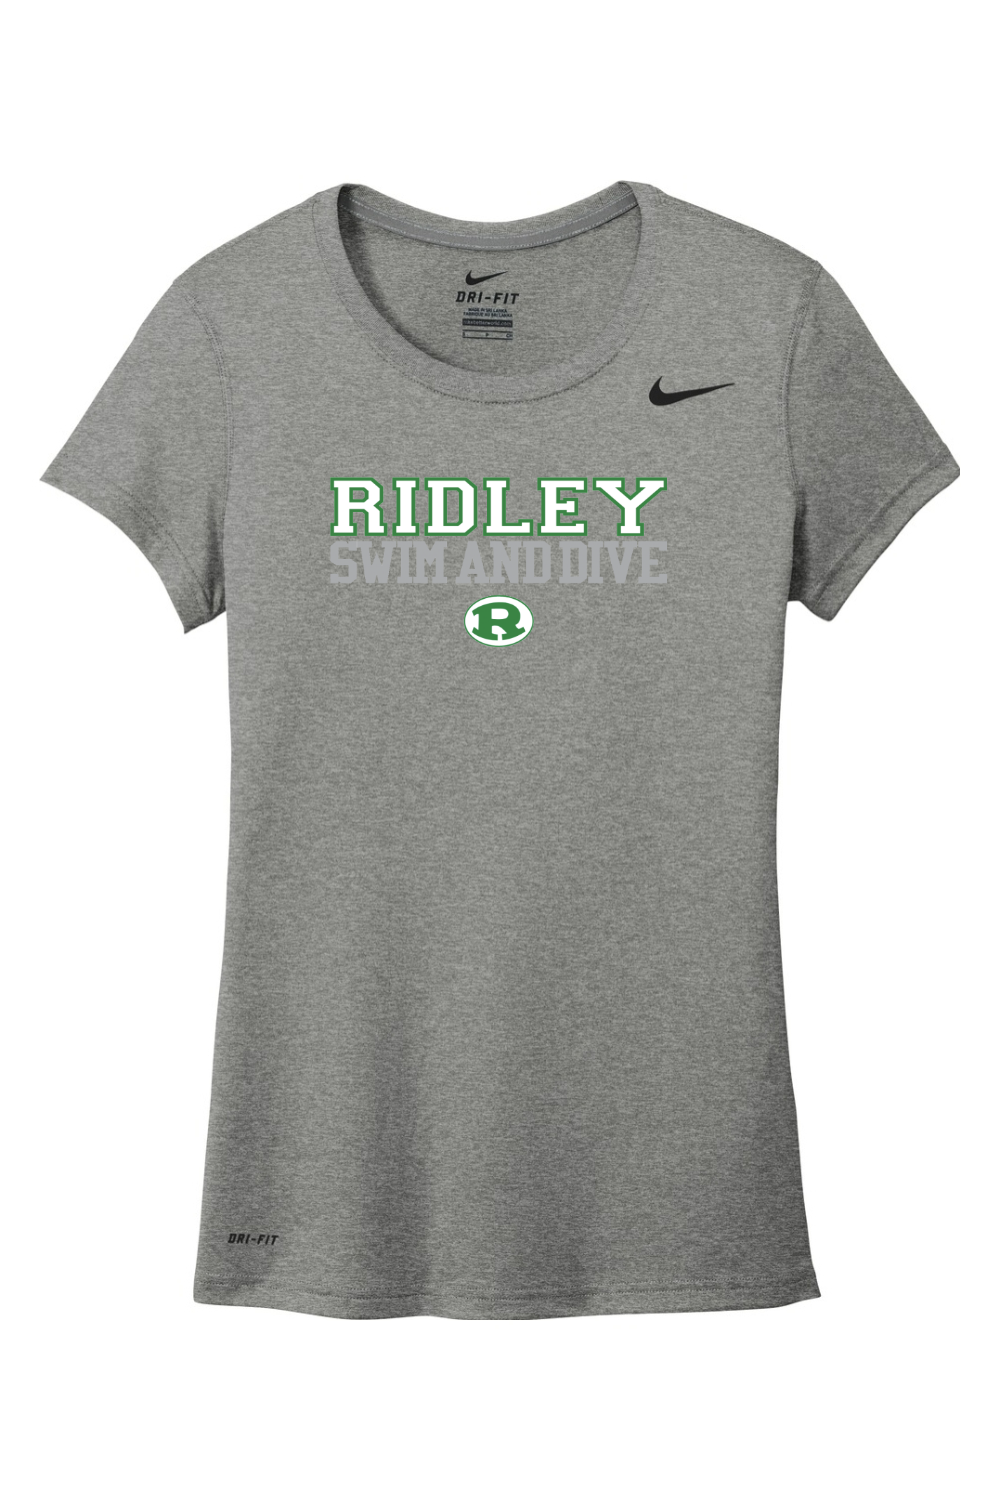 Ridley Swim and Dive Nike Ladies Legend Tee